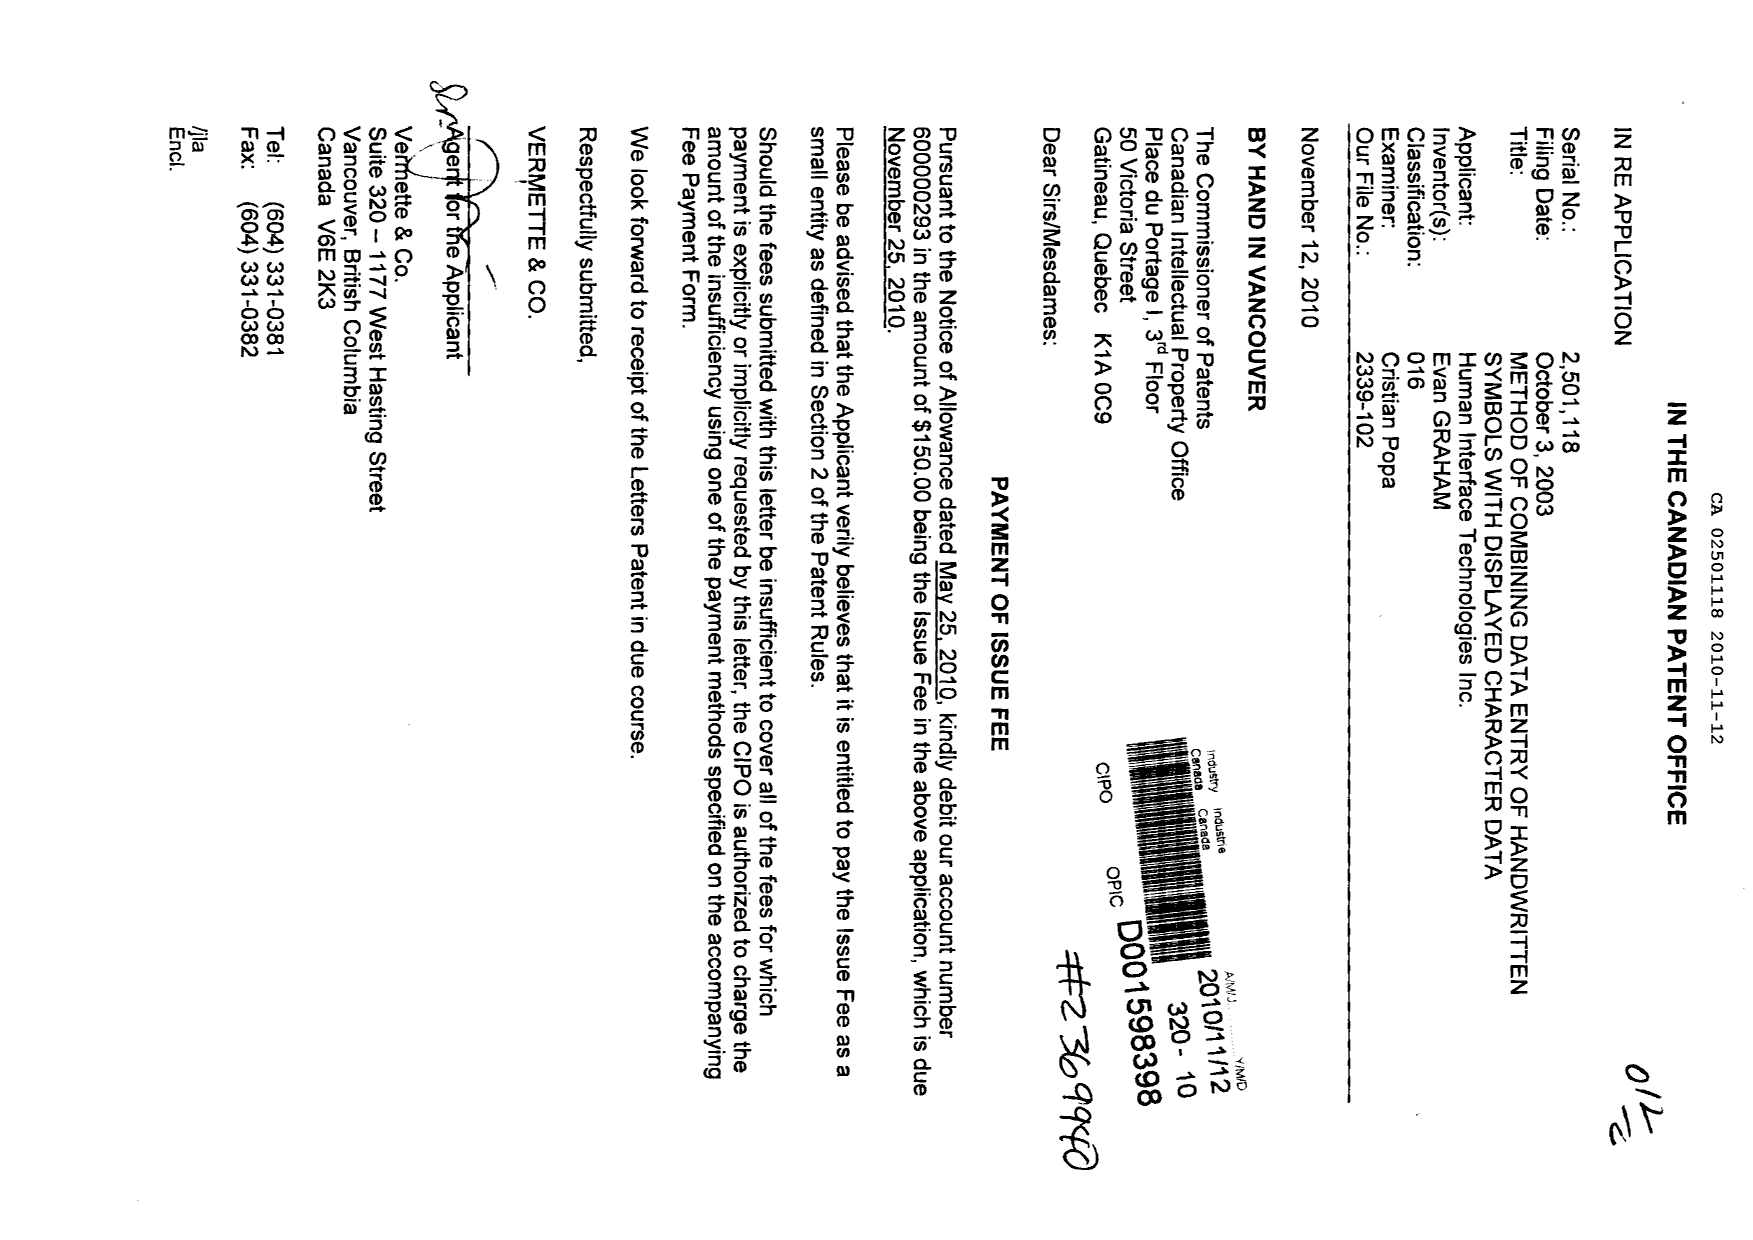 Canadian Patent Document 2501118. Correspondence 20101112. Image 1 of 1